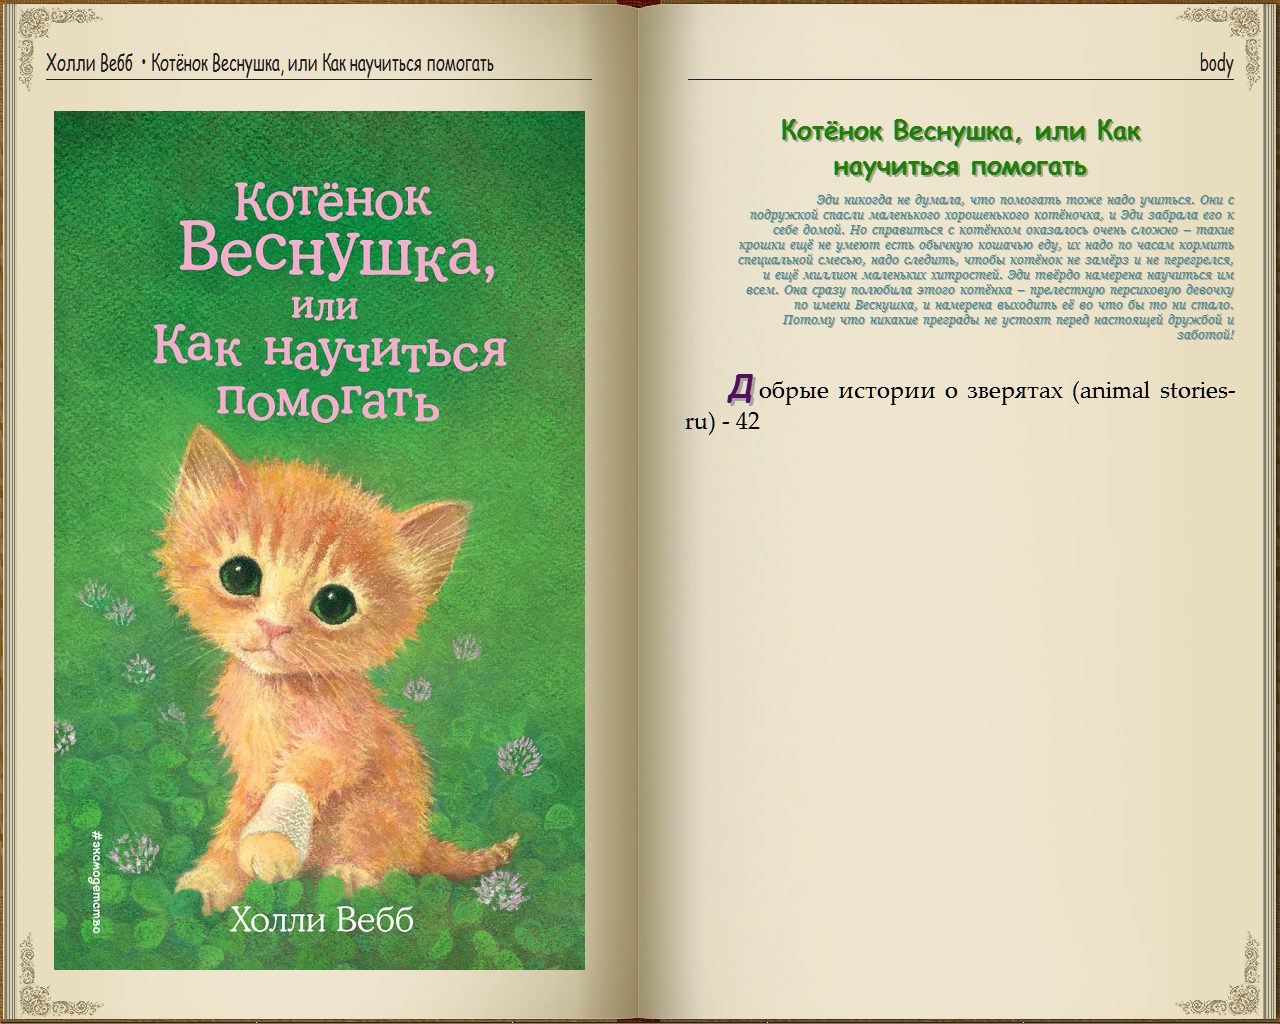 Котенок том читать. Книжки Холли Вебб про котят и щенят. Холли Вебб книги про котят и щенят. Книжки Холли Вебб про животных. Книги Холли Вебб про животных на русском.